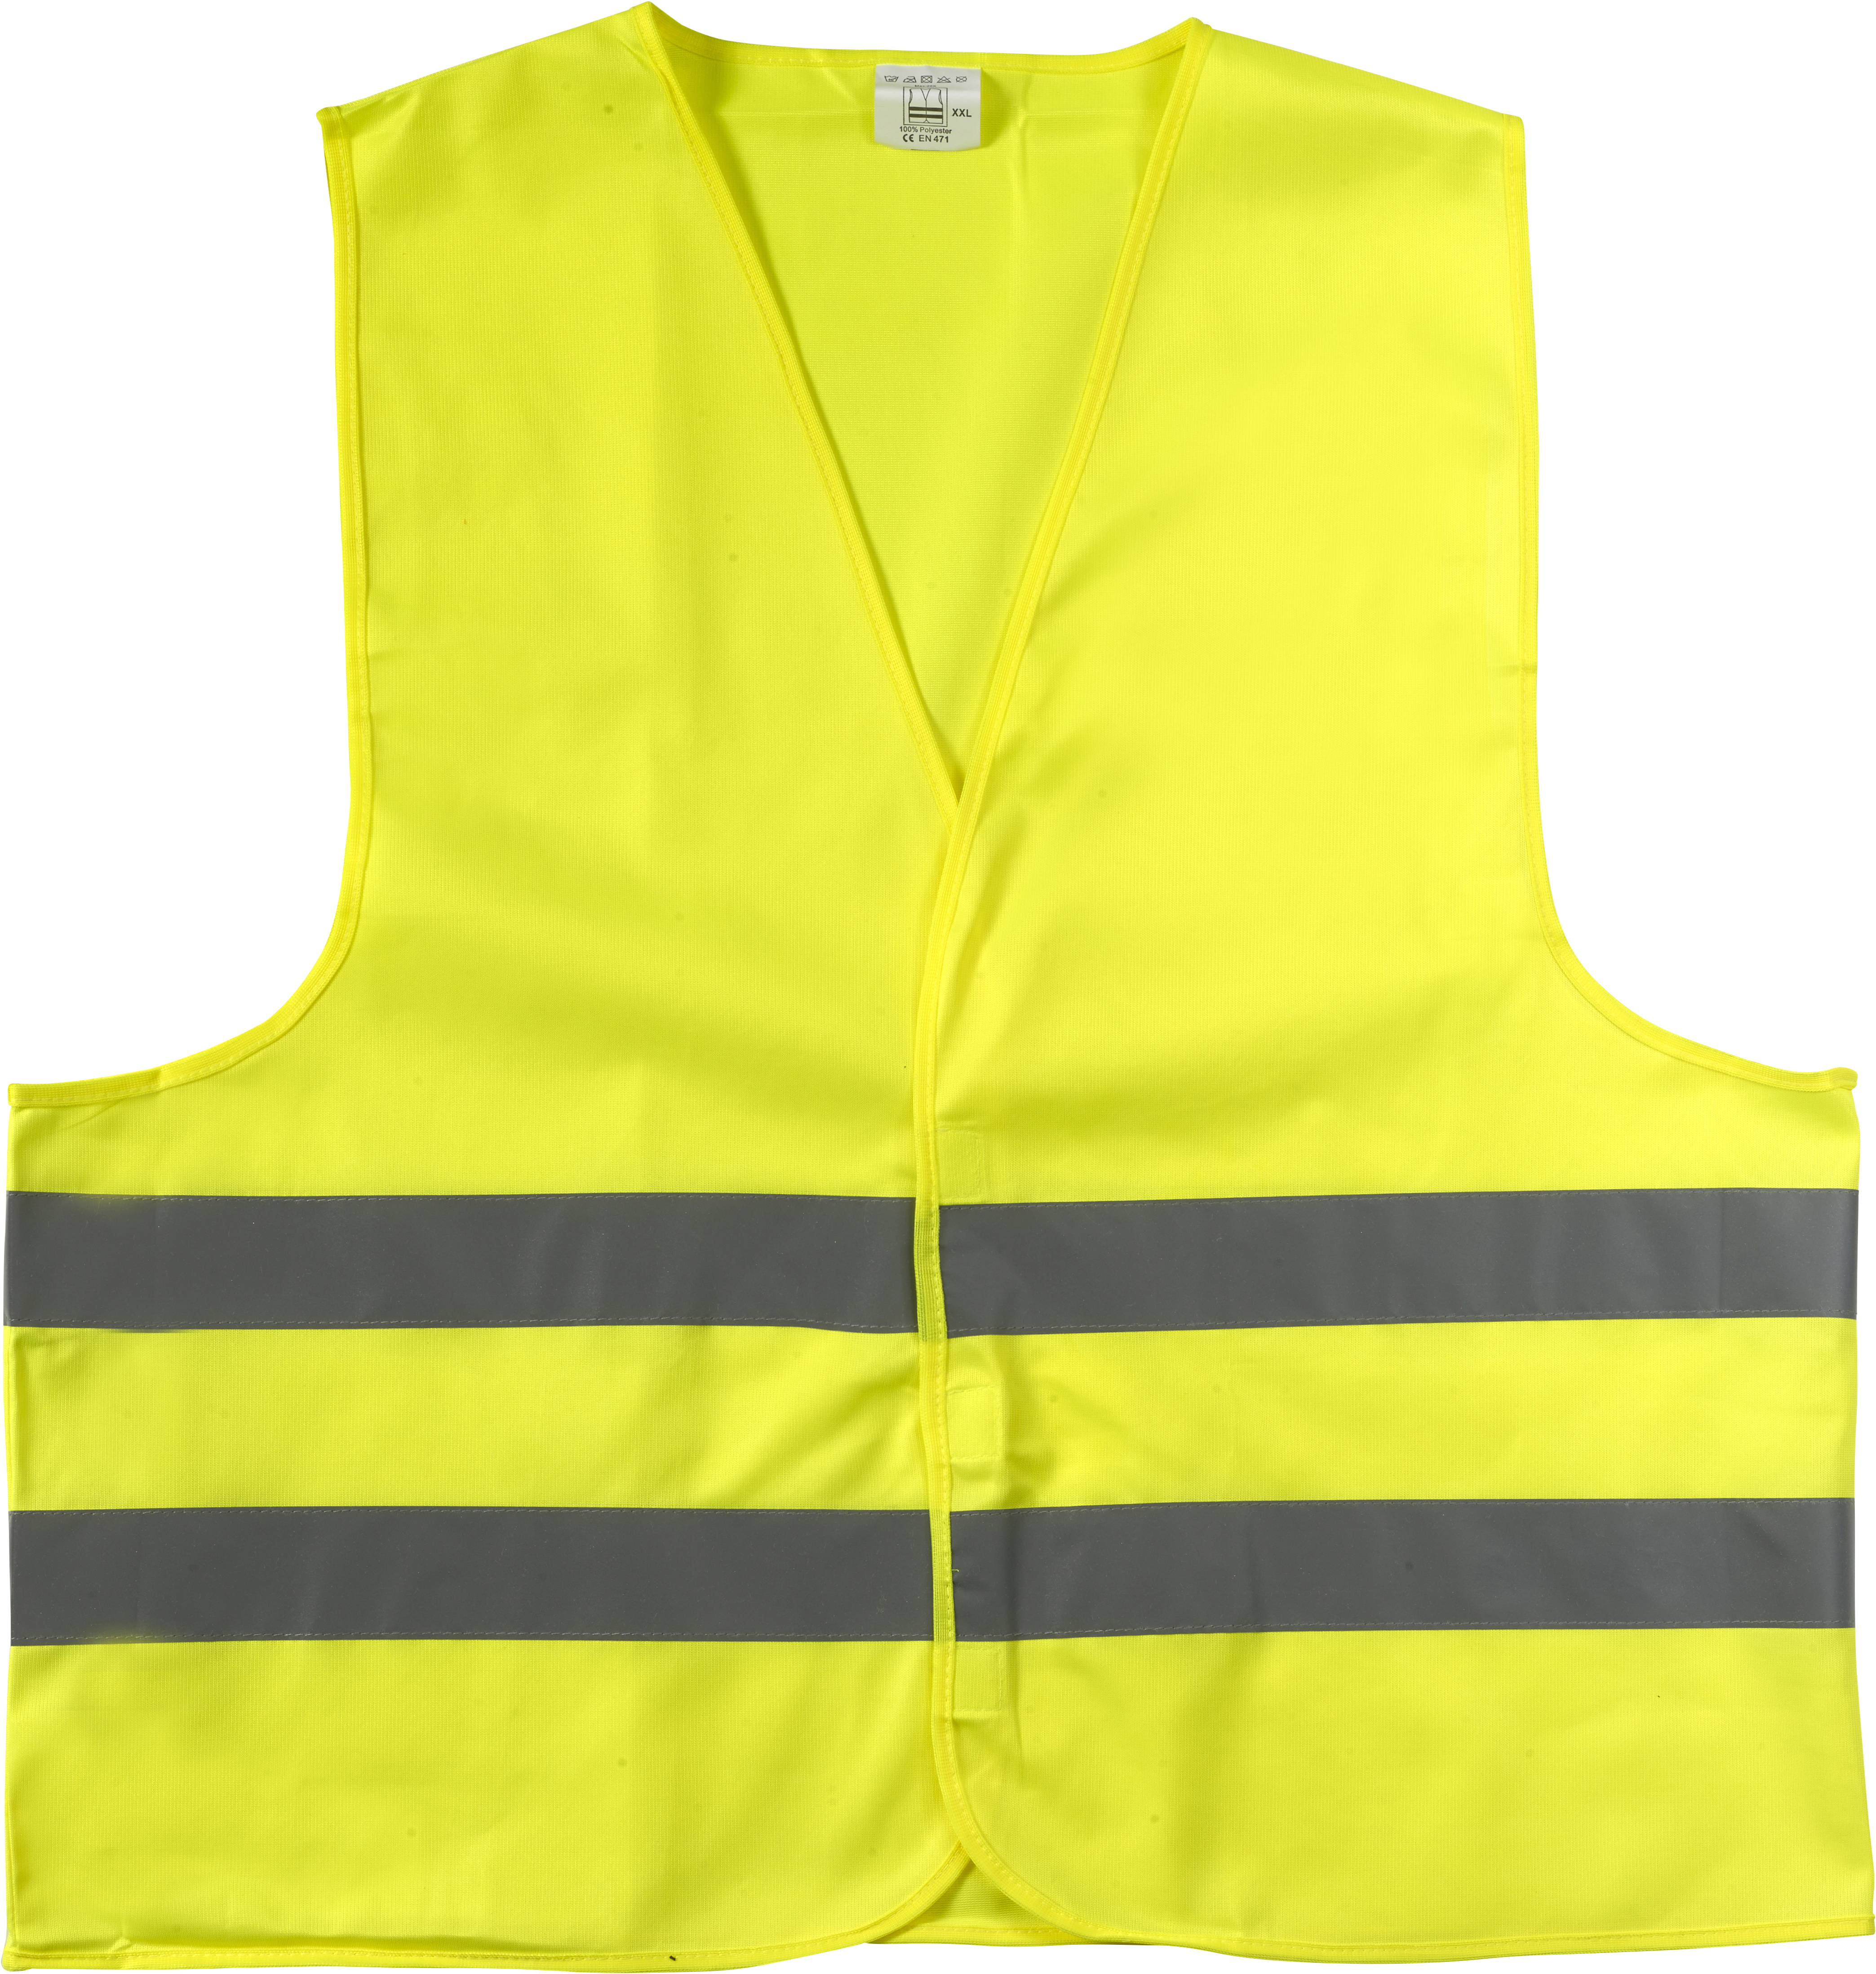 006541 006999999 2d090 frt pro01 fal - High visibility safety jacket polyester (150D)